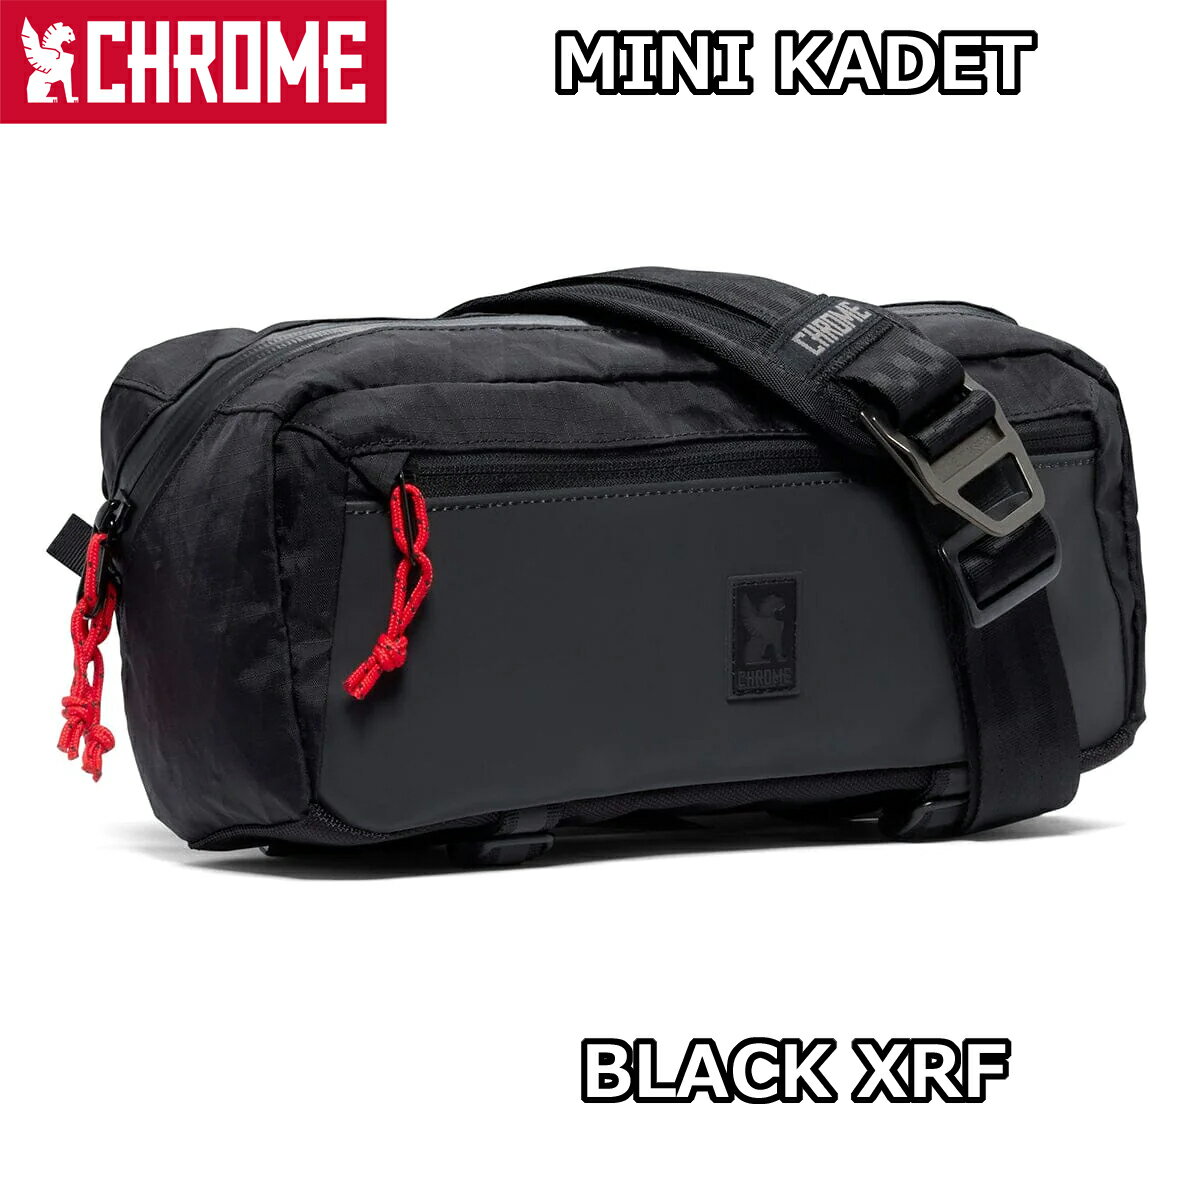 CHROME MINI KADET BLACK XRF クローム ミニ カデット ブラックエックスリフレクティブ SLING BAG スリングバッグ バック 鞄 BAG